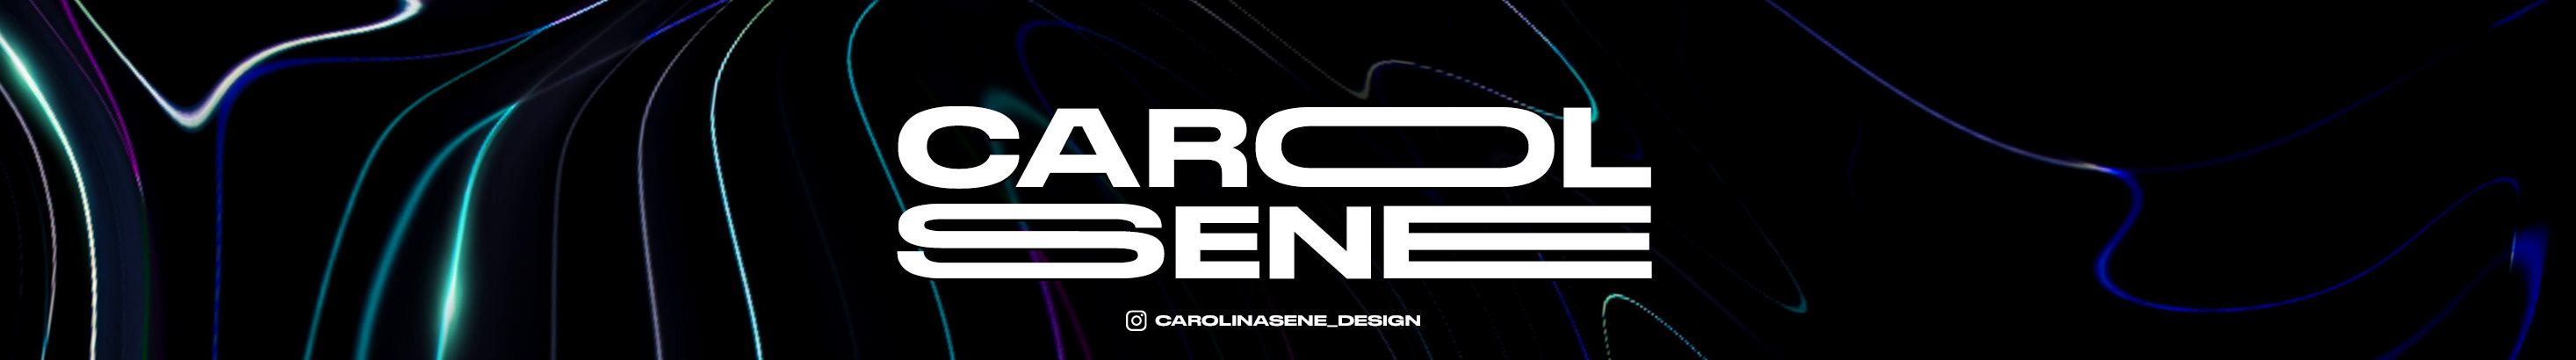 Carolina Sene's profile banner